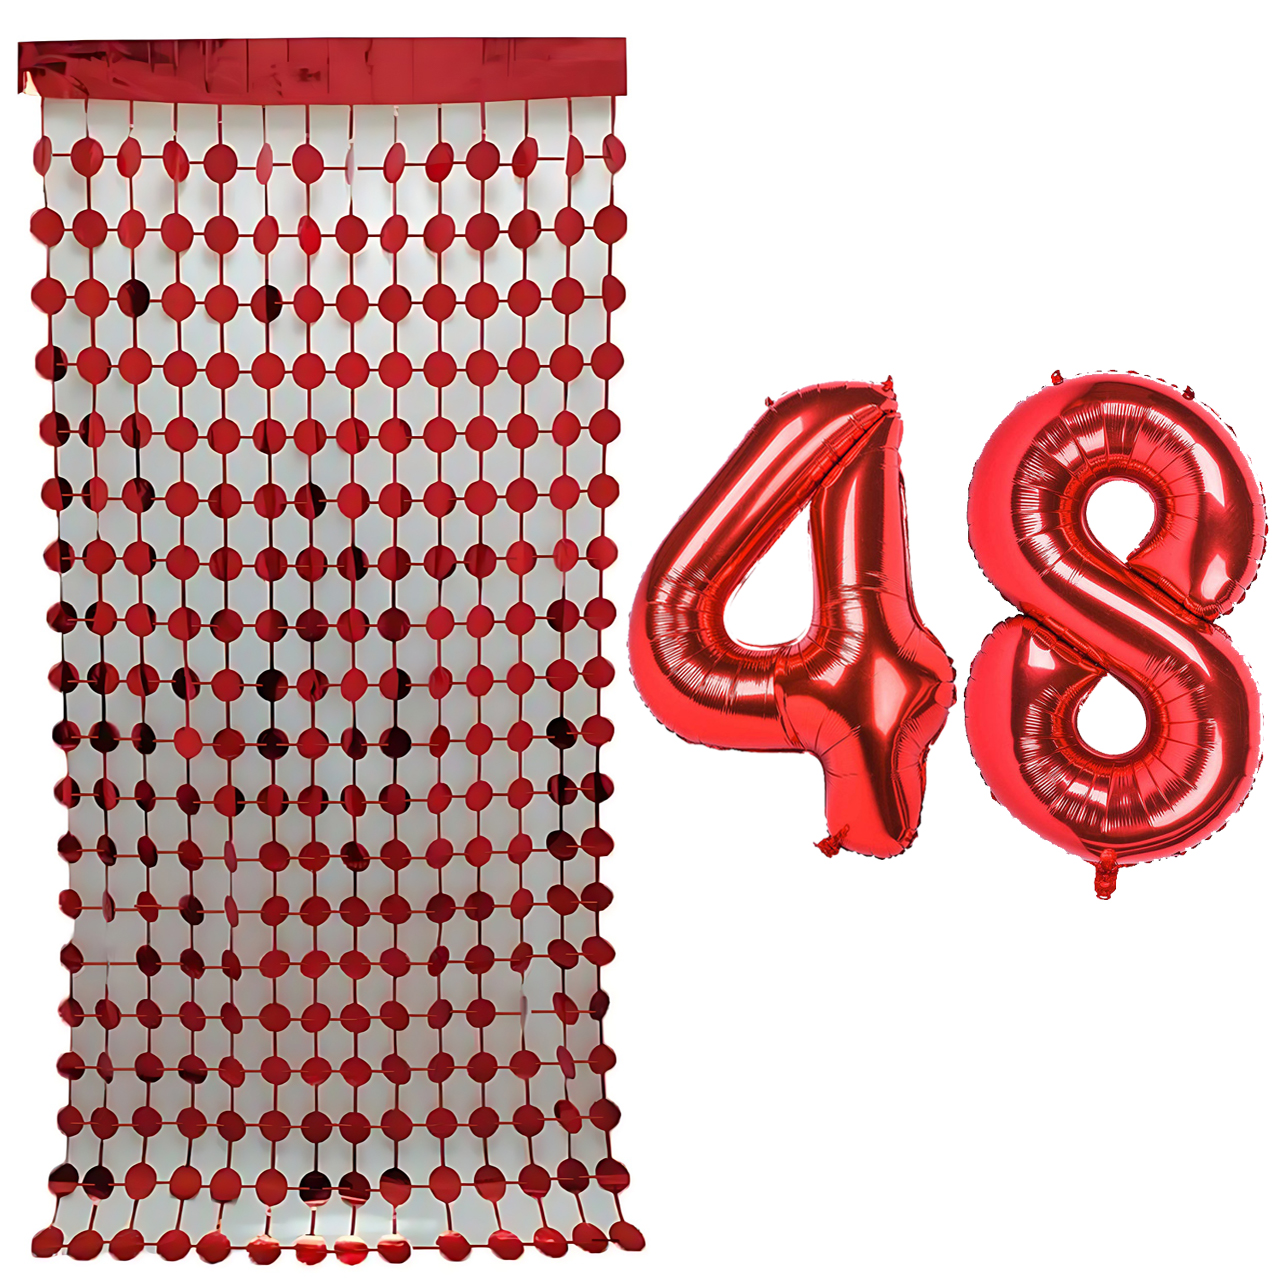  بادکنک فویلی مسترتم طرح عدد 48 به همراه ریسه تزئینی بسته 3 عددی